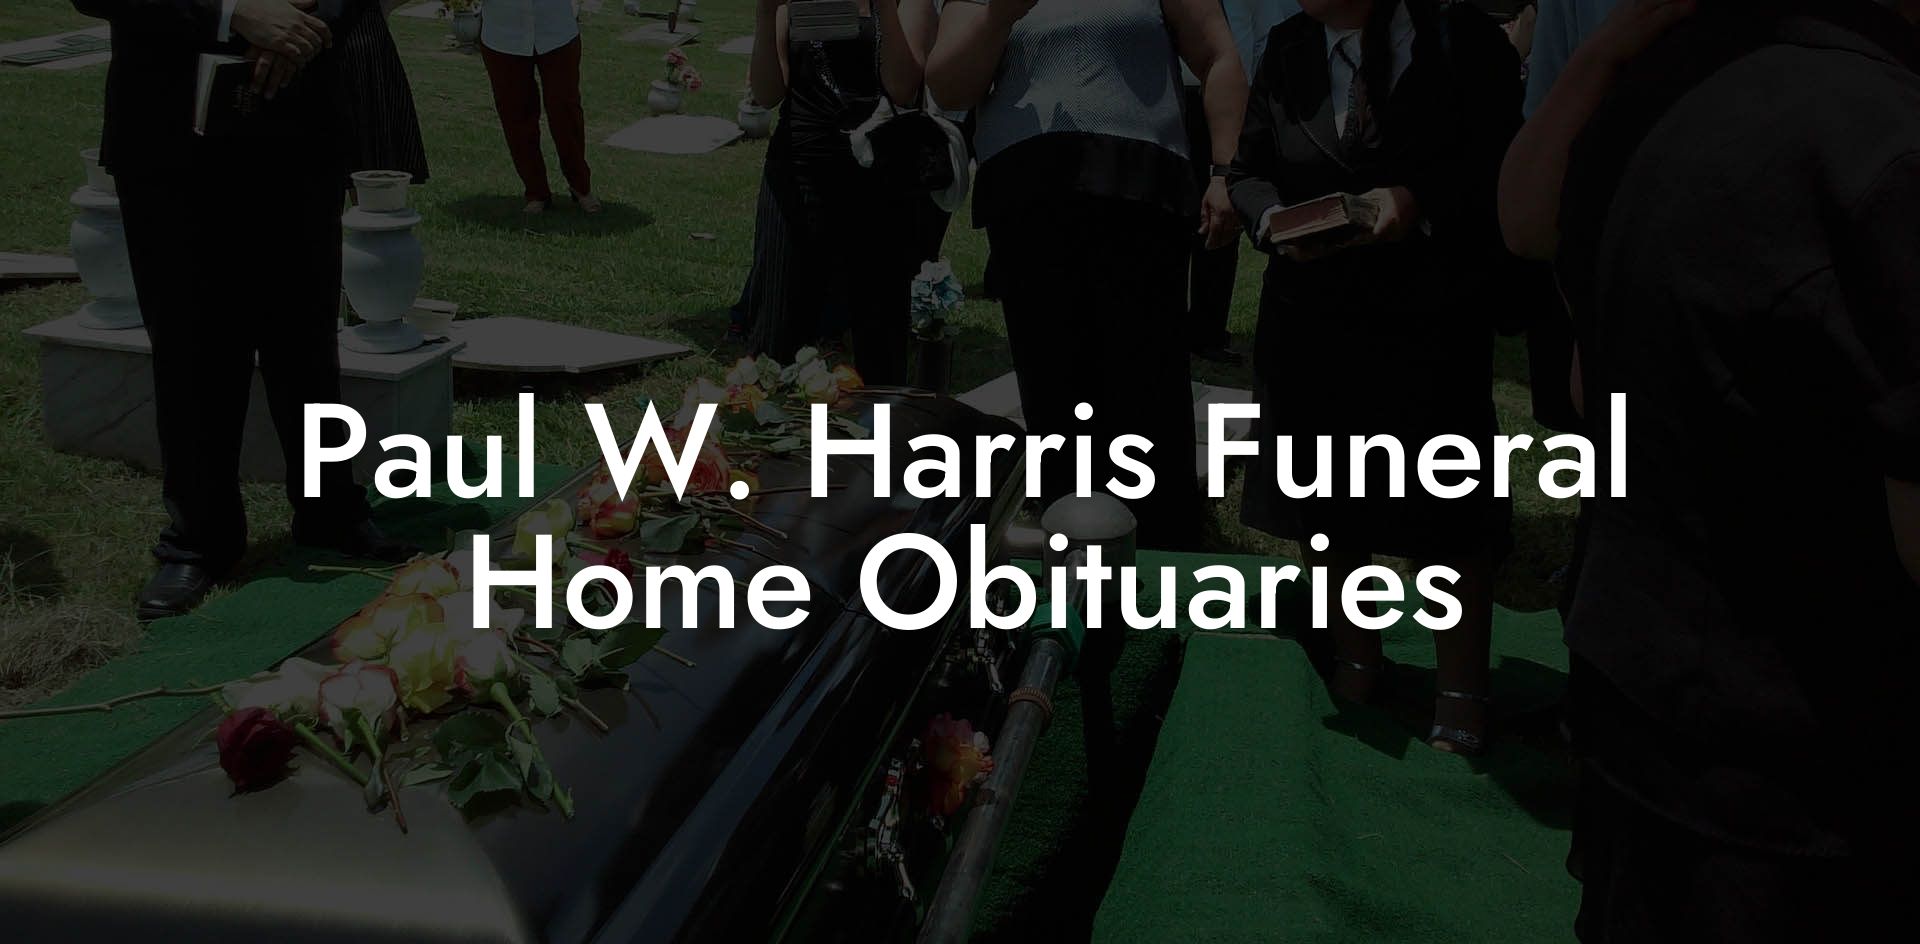 Paul W. Harris Funeral Home Obituaries